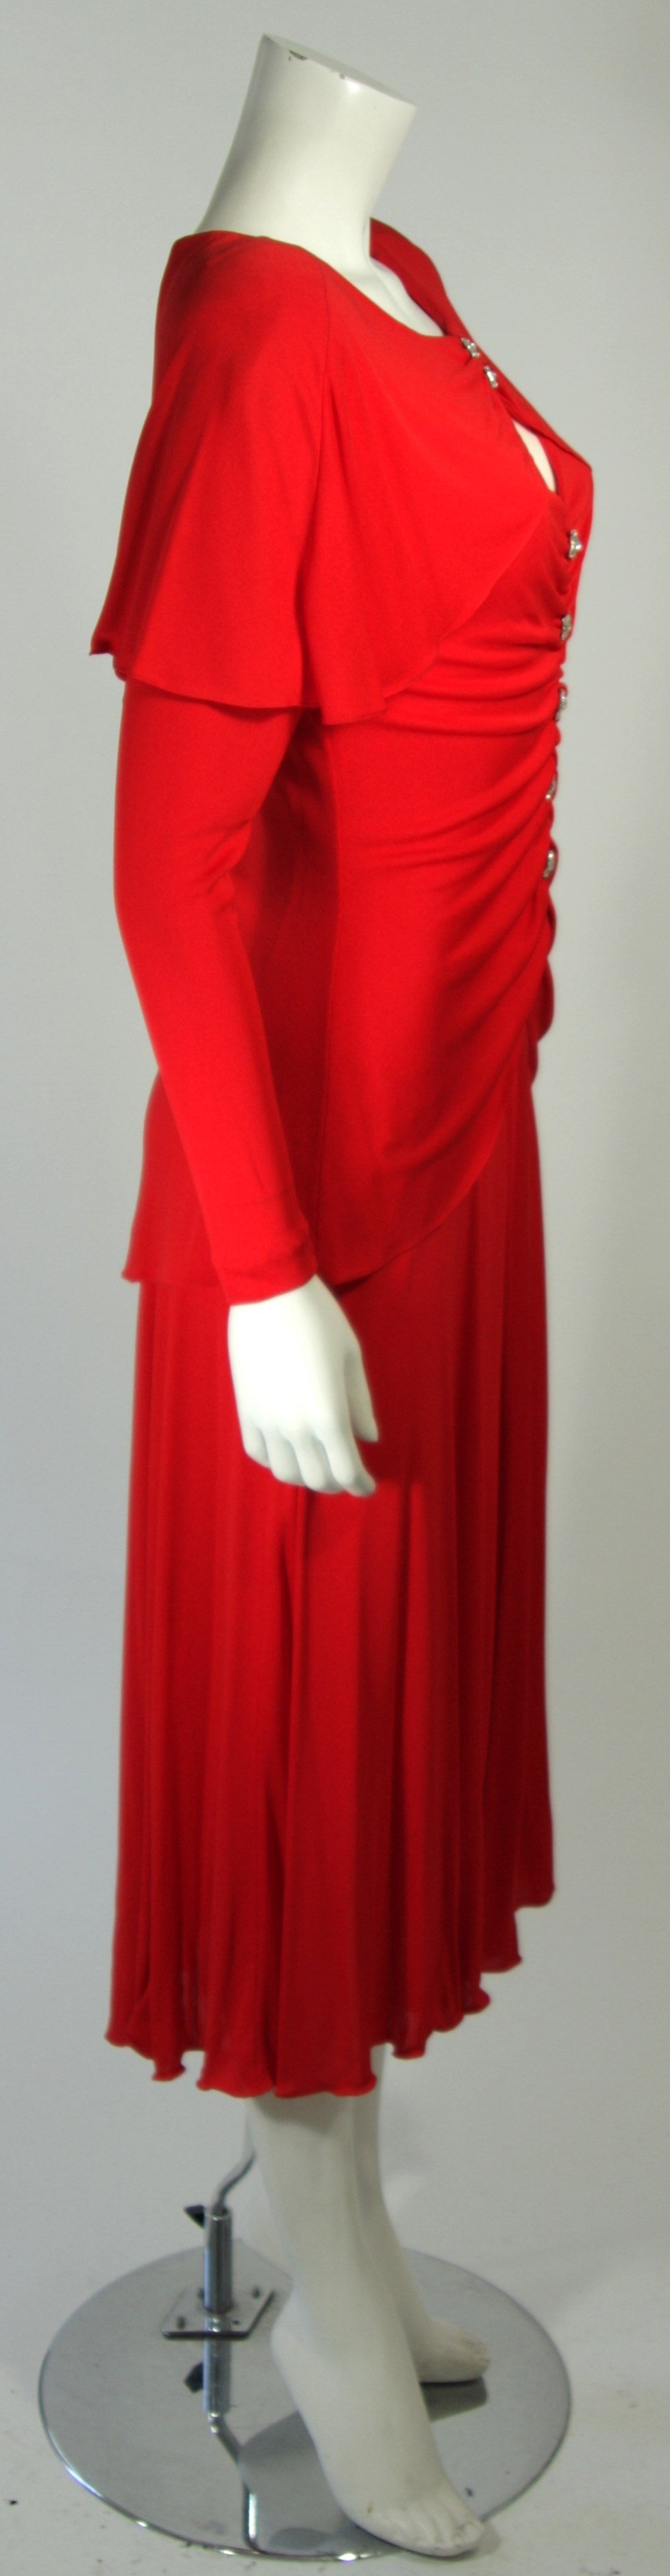 Holly Harp - Robe à manches longues en jersey rouge avec boutons en strass, taille moyenne en vente 2